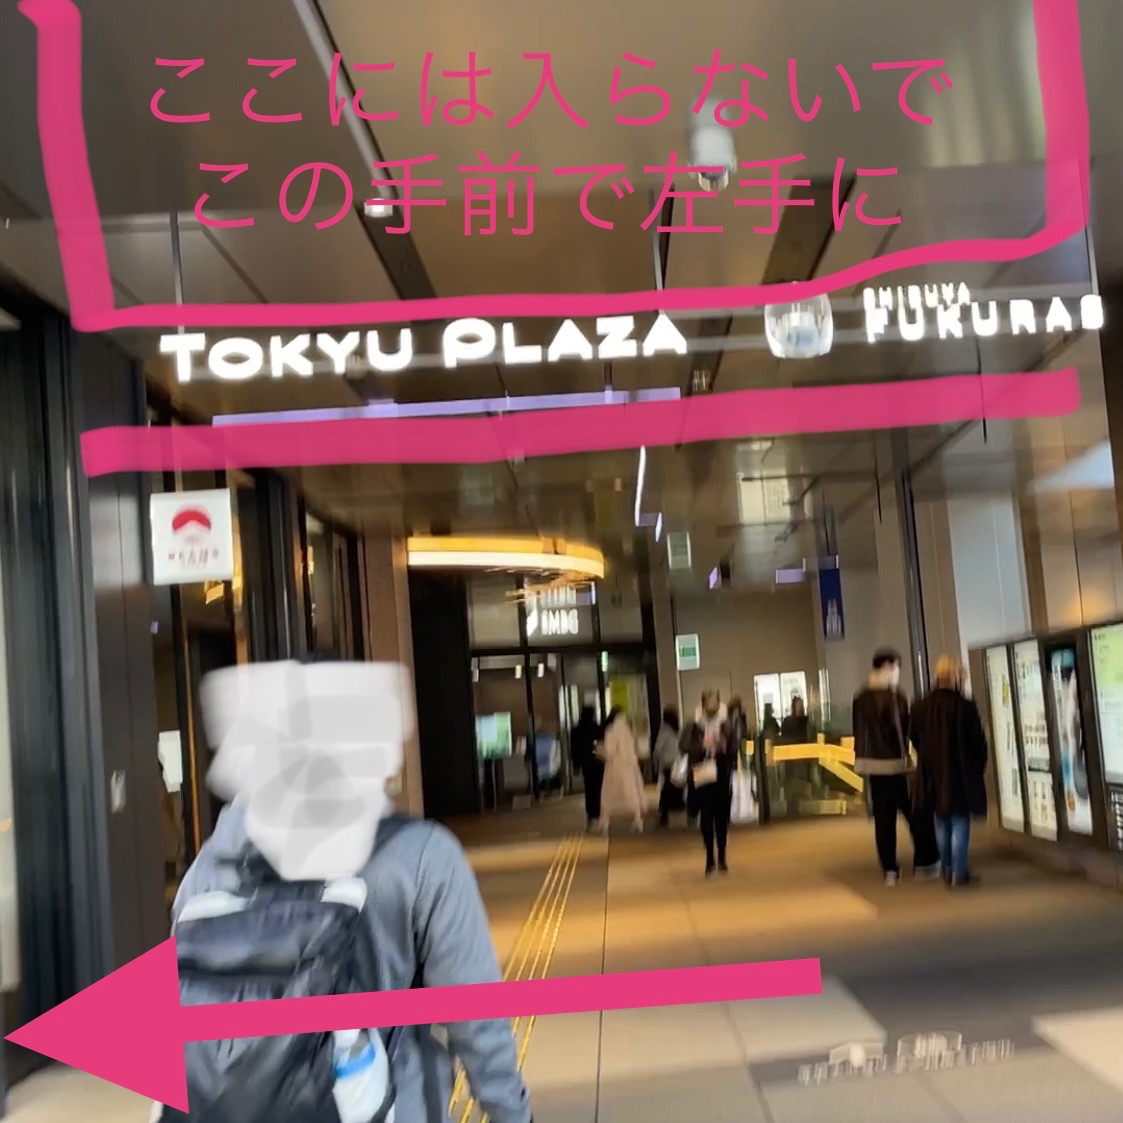 Shibuya FUKURASU　TOKYU PLAZAのネオン